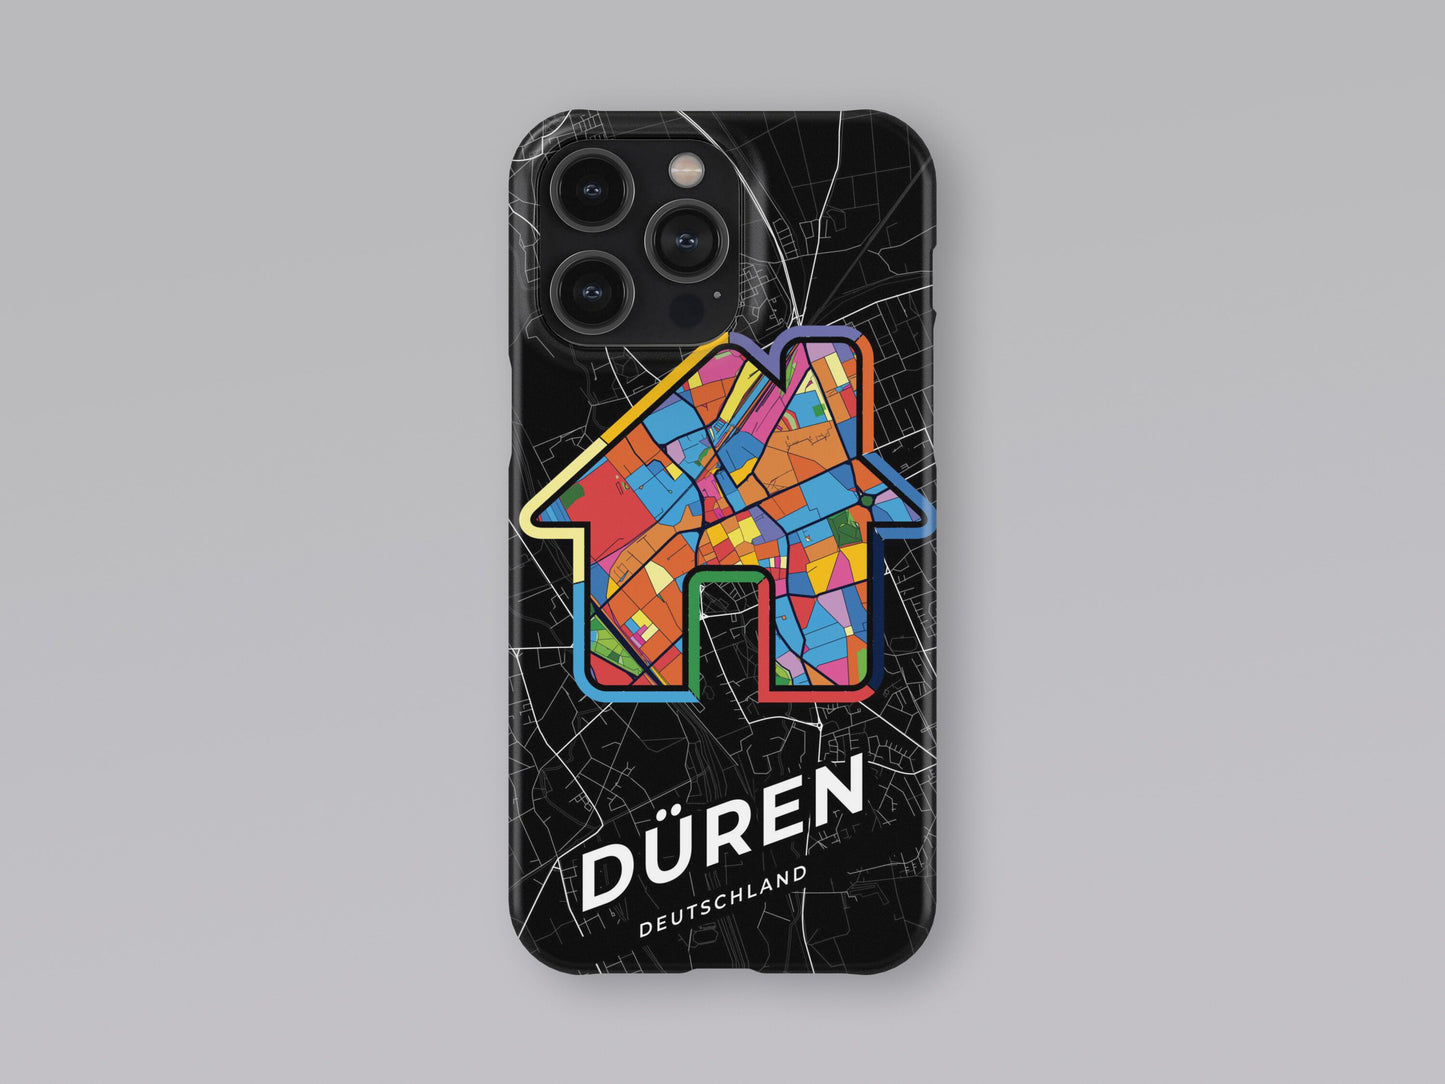 Düren Deutschland slim phone case with colorful icon. Birthday, wedding or housewarming gift. Couple match cases. 3